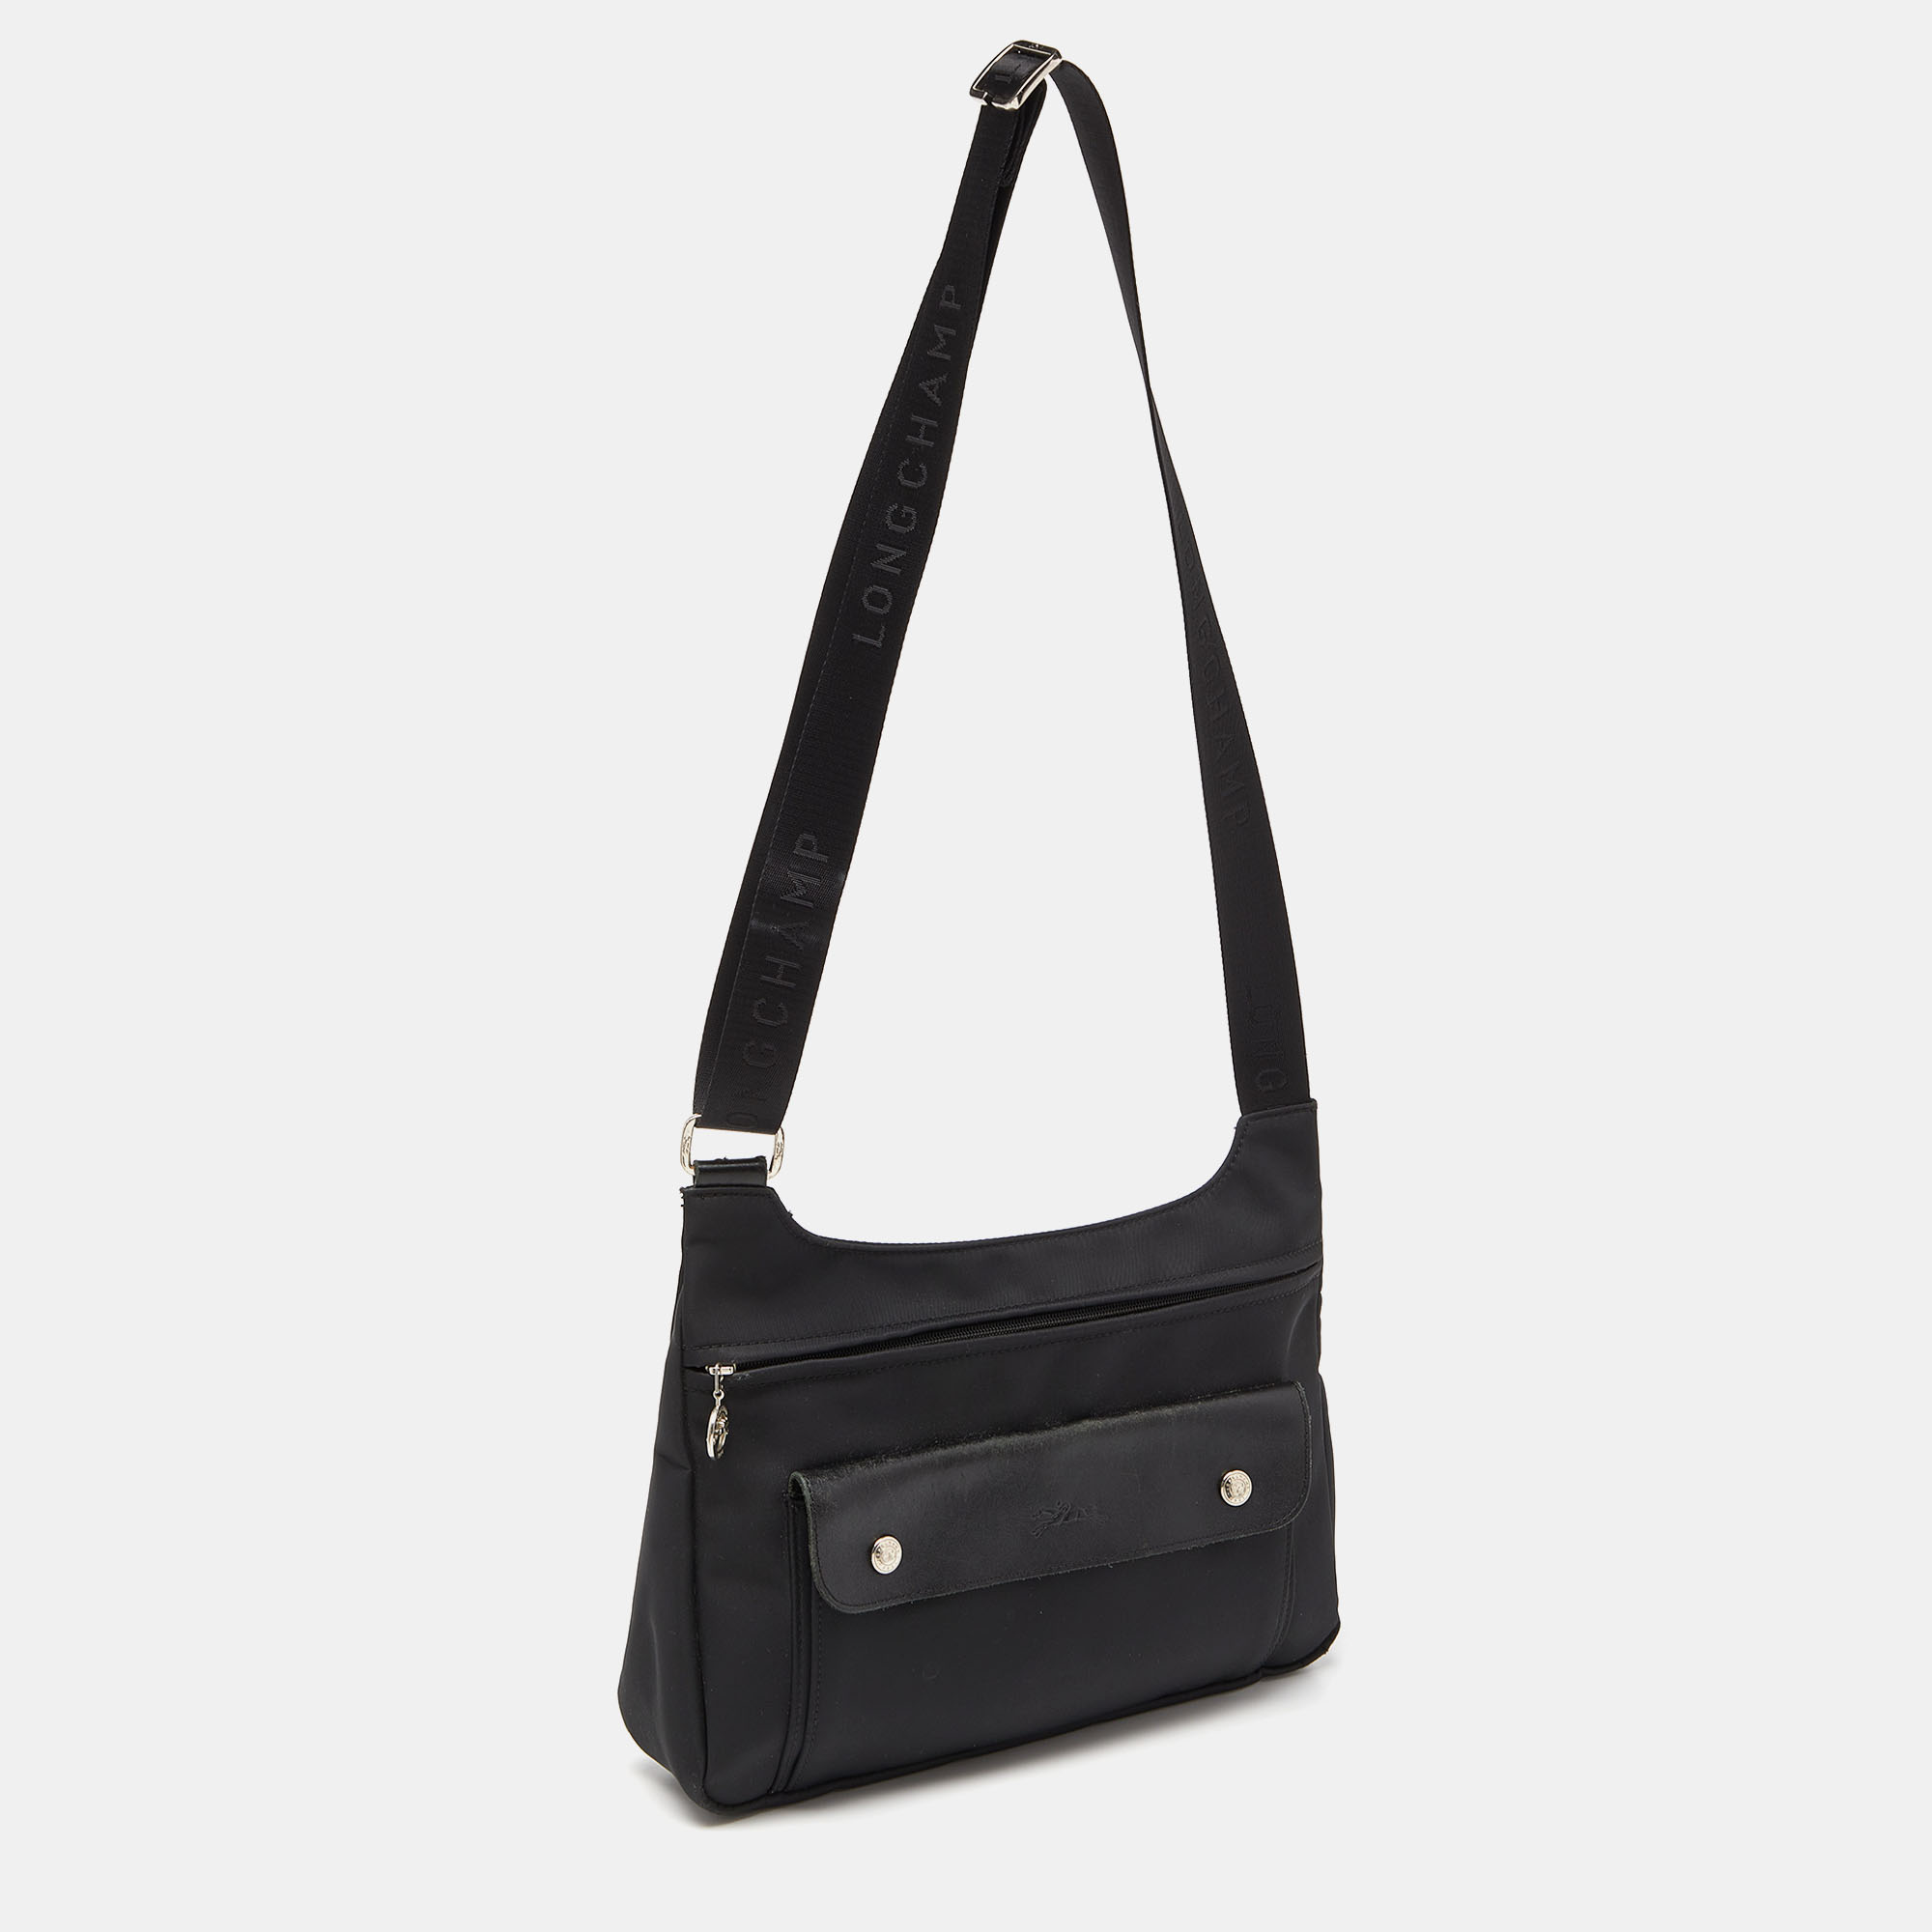 Longchamp Black Nylon And Leather Messenger Bag